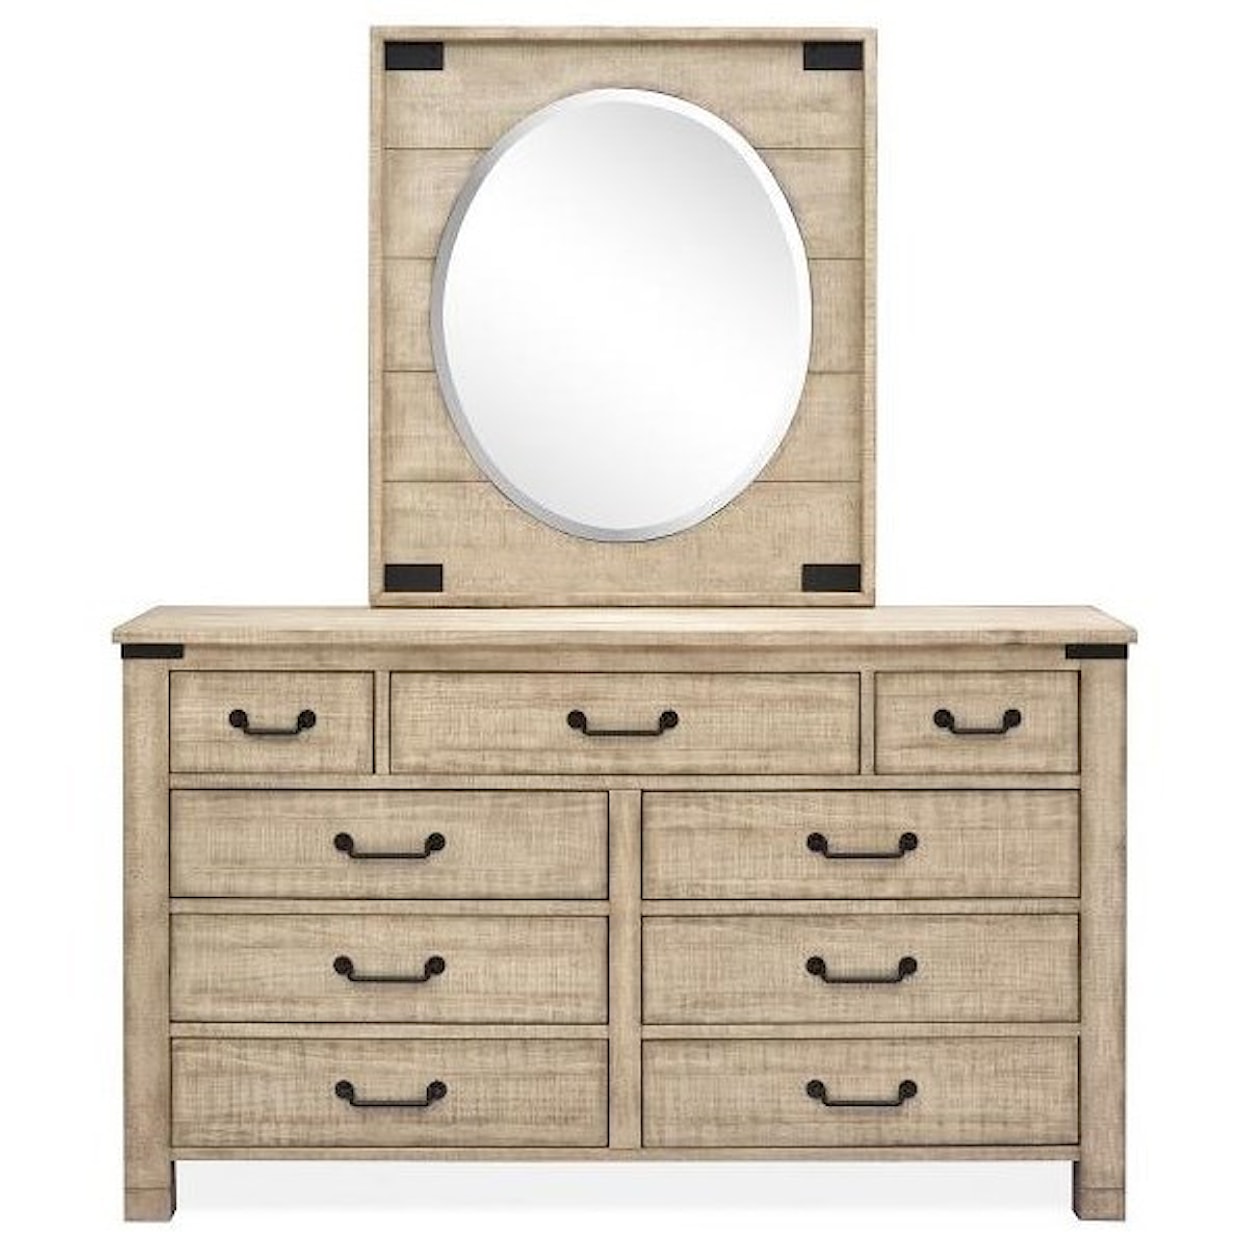 Magnussen Home Radcliffe Bedroom Portrait Oval Mirror